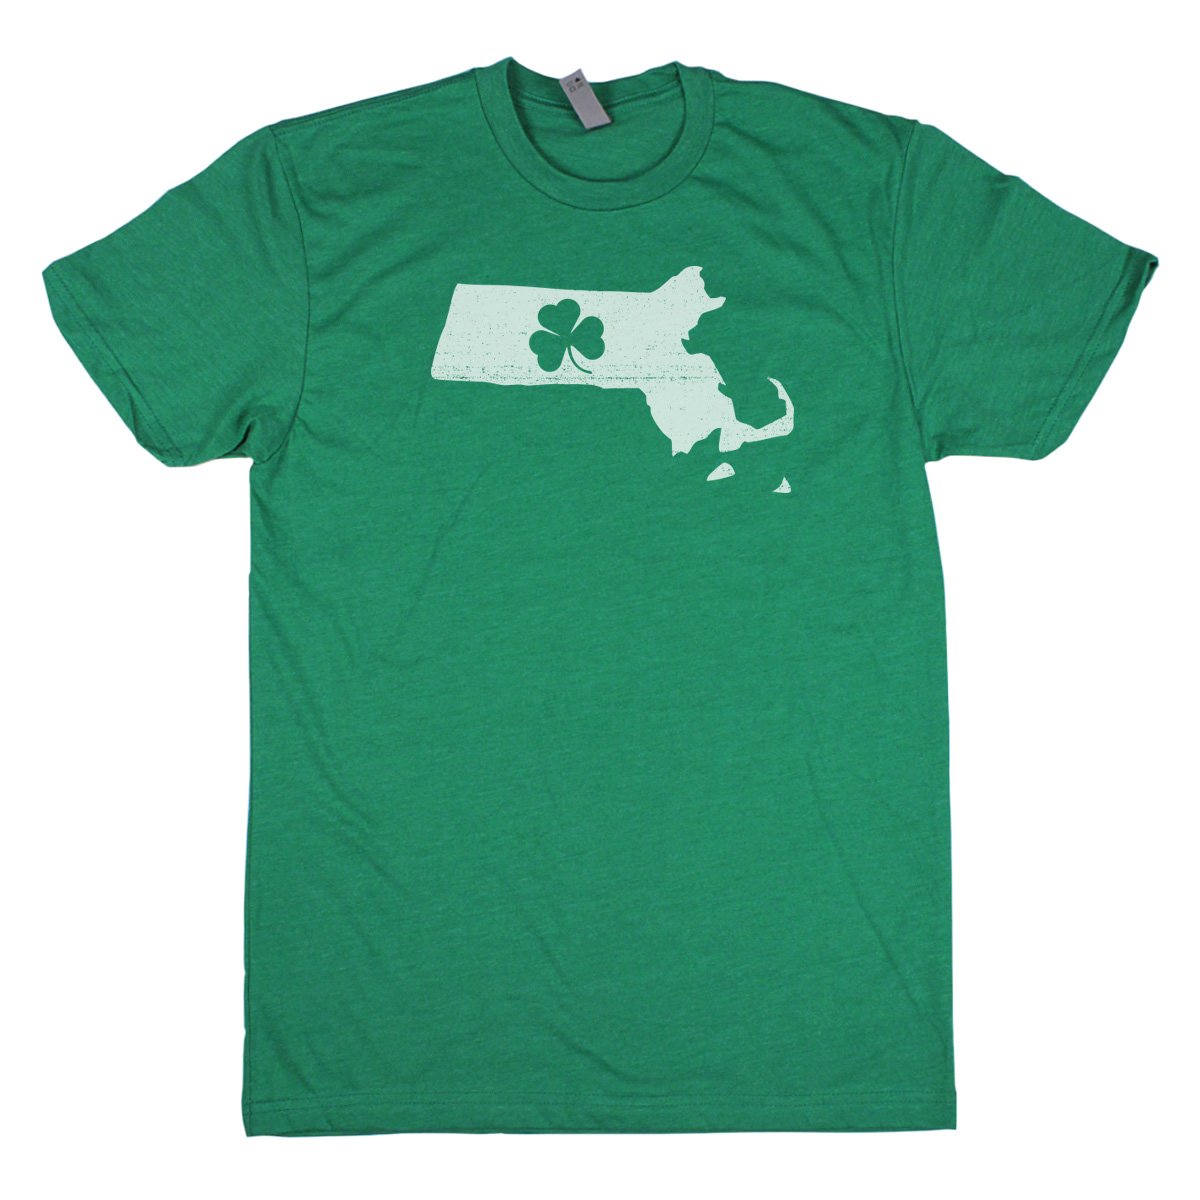 Shamrock Men's Unisex T-Shirt - Texas